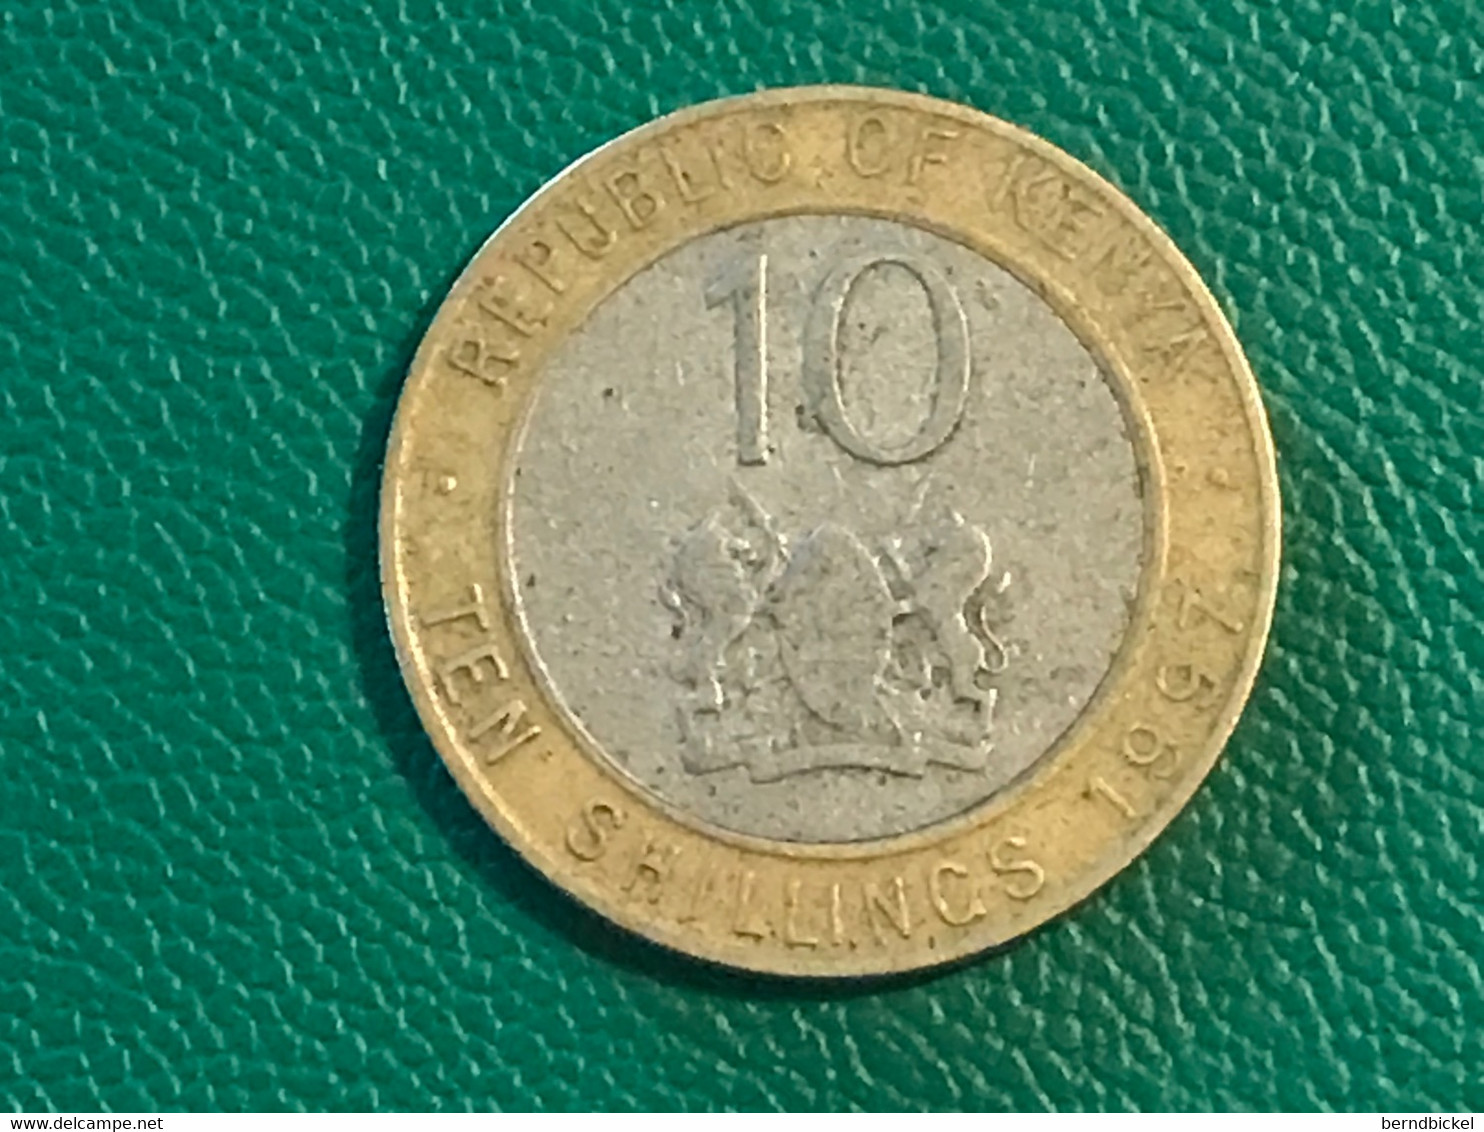 Münze Münzen Umlaufmünze Kenia 10 Shilling 1997 - Kenya